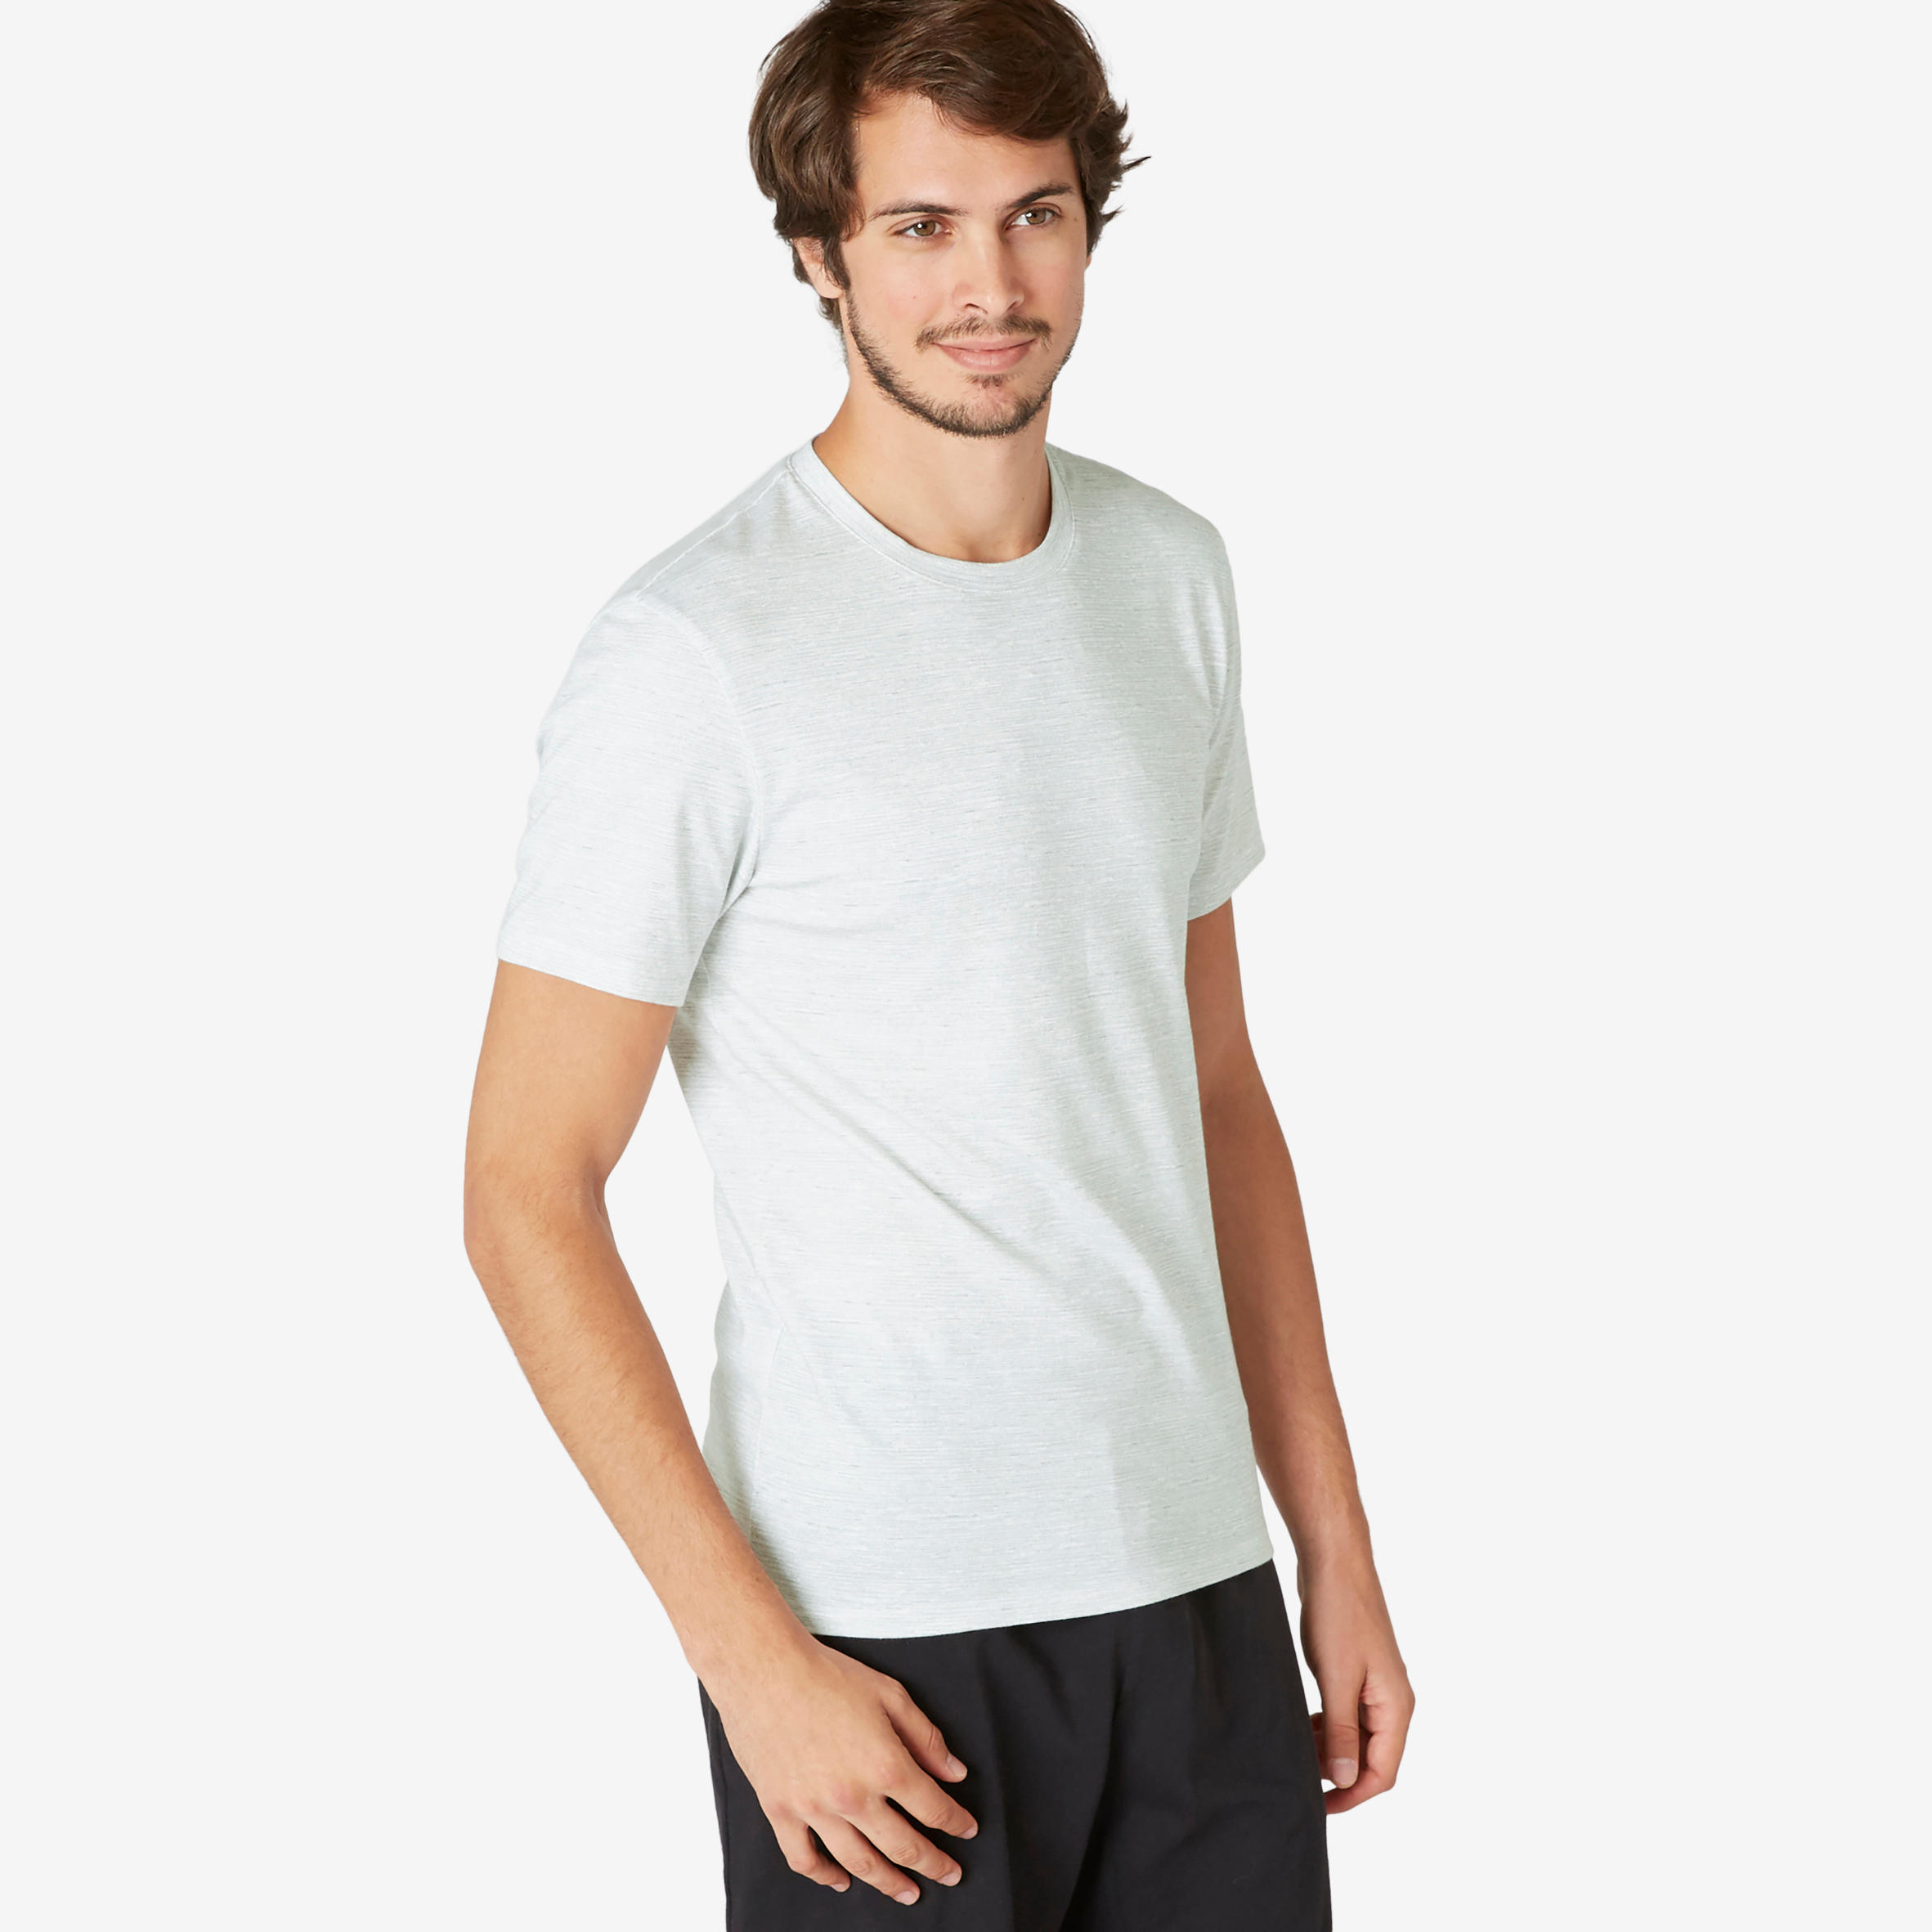 DOMYOS Men's Slim-Fit T-Shirt 500 - White Pattern